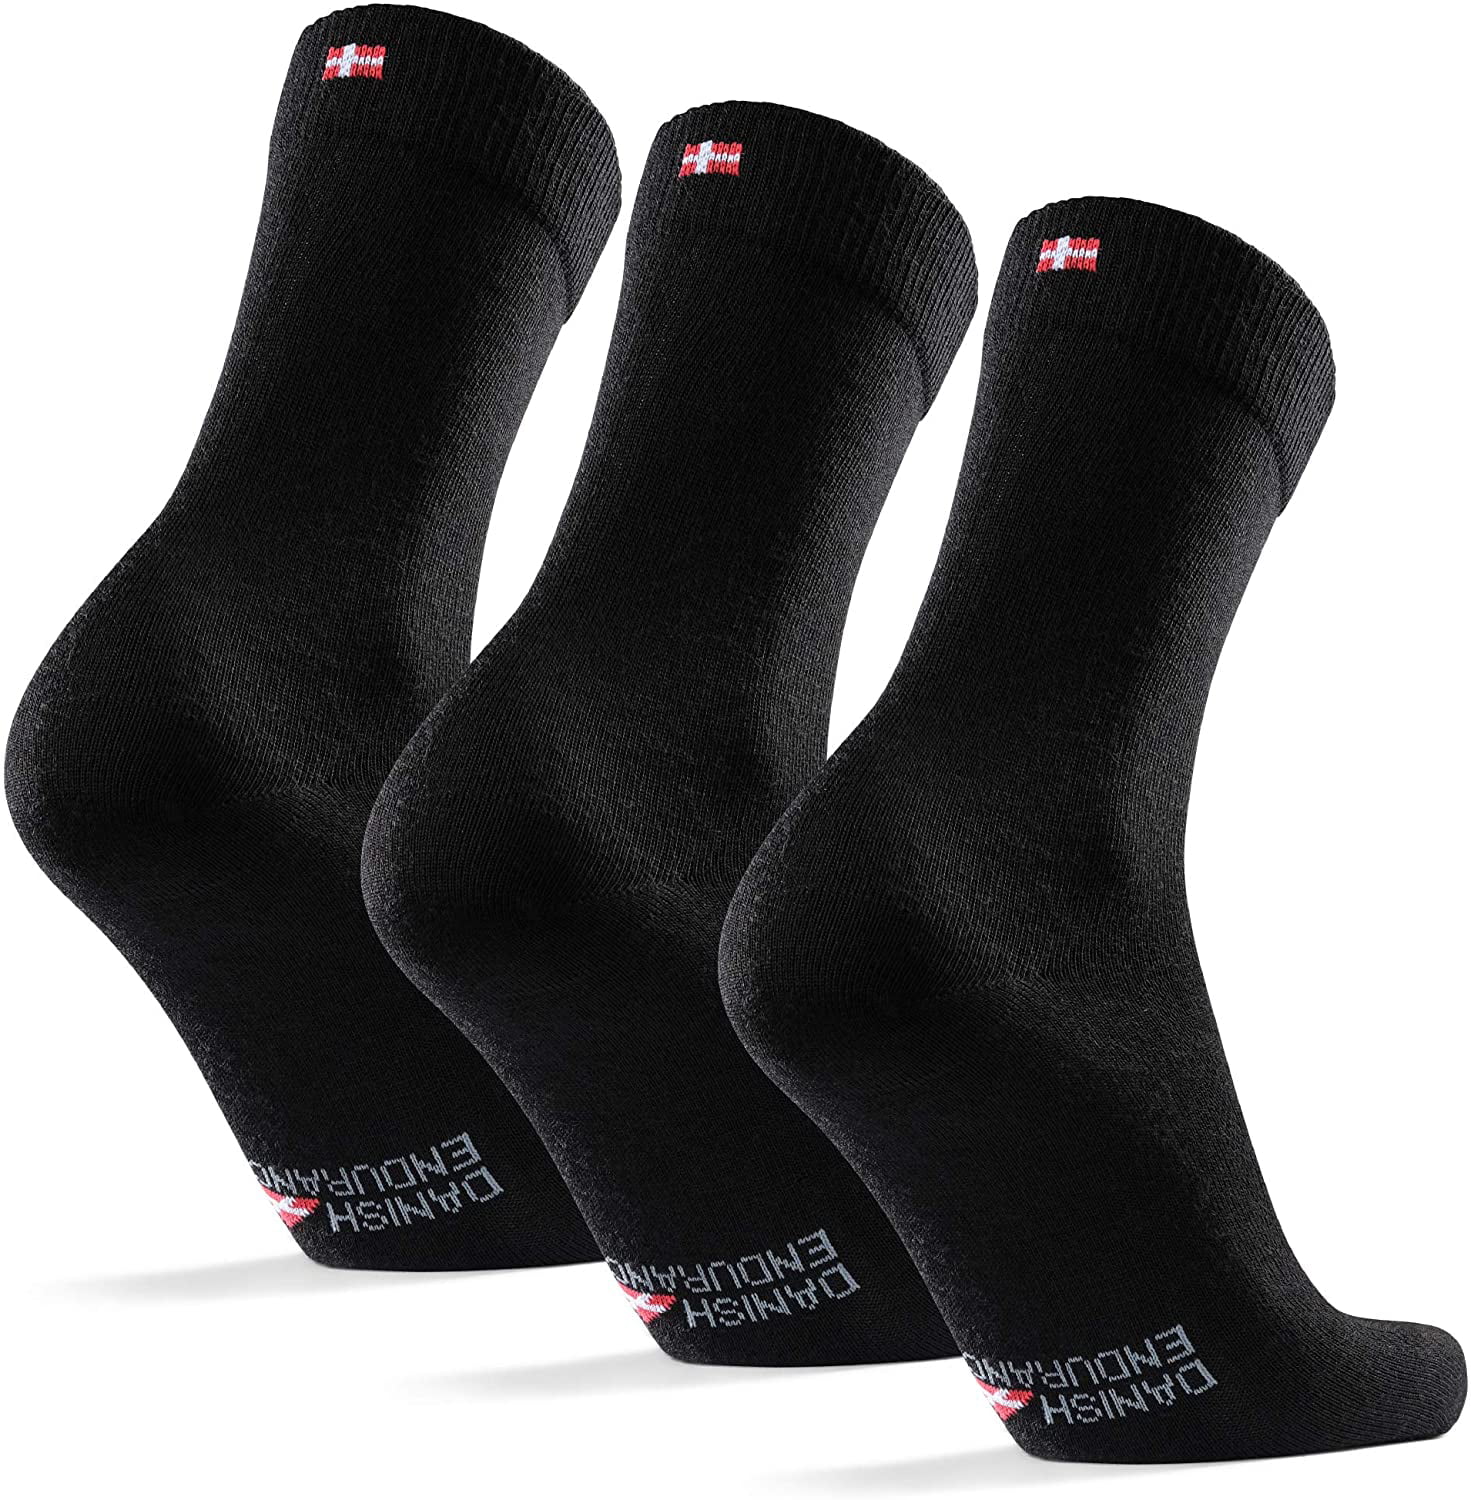 4 Pair Men Premium Soft MERINO Wool Blend Crew Black Socks Large Sock USA Made 